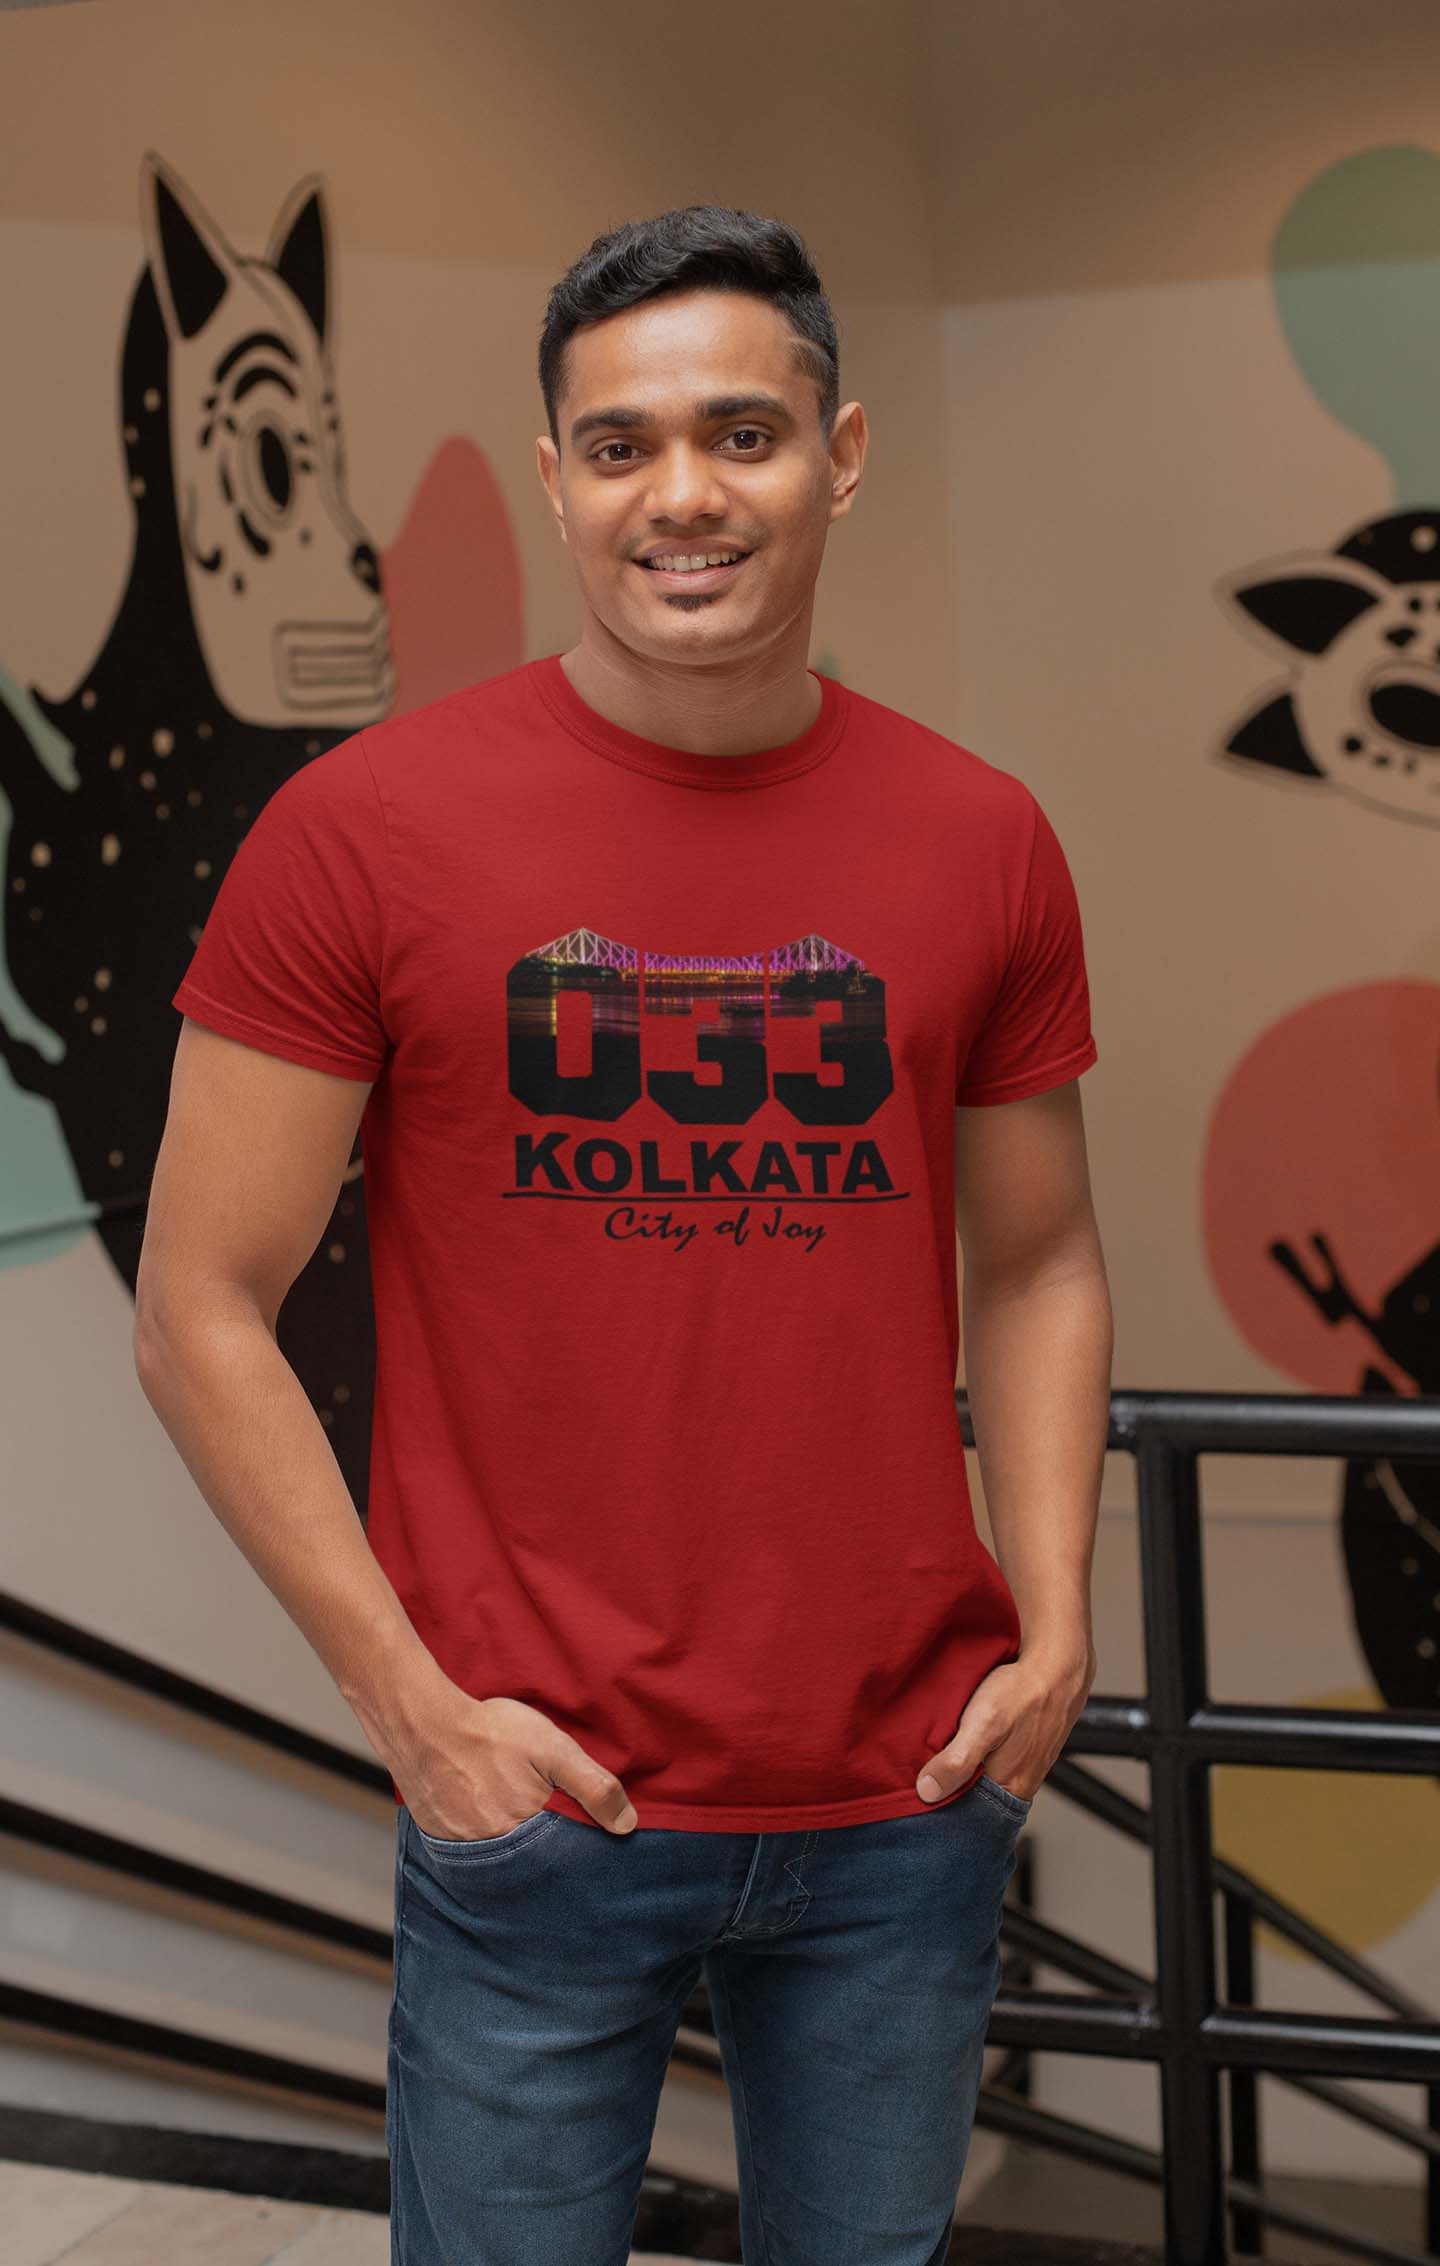 Kolkata 033 T Shirt Cherry Red